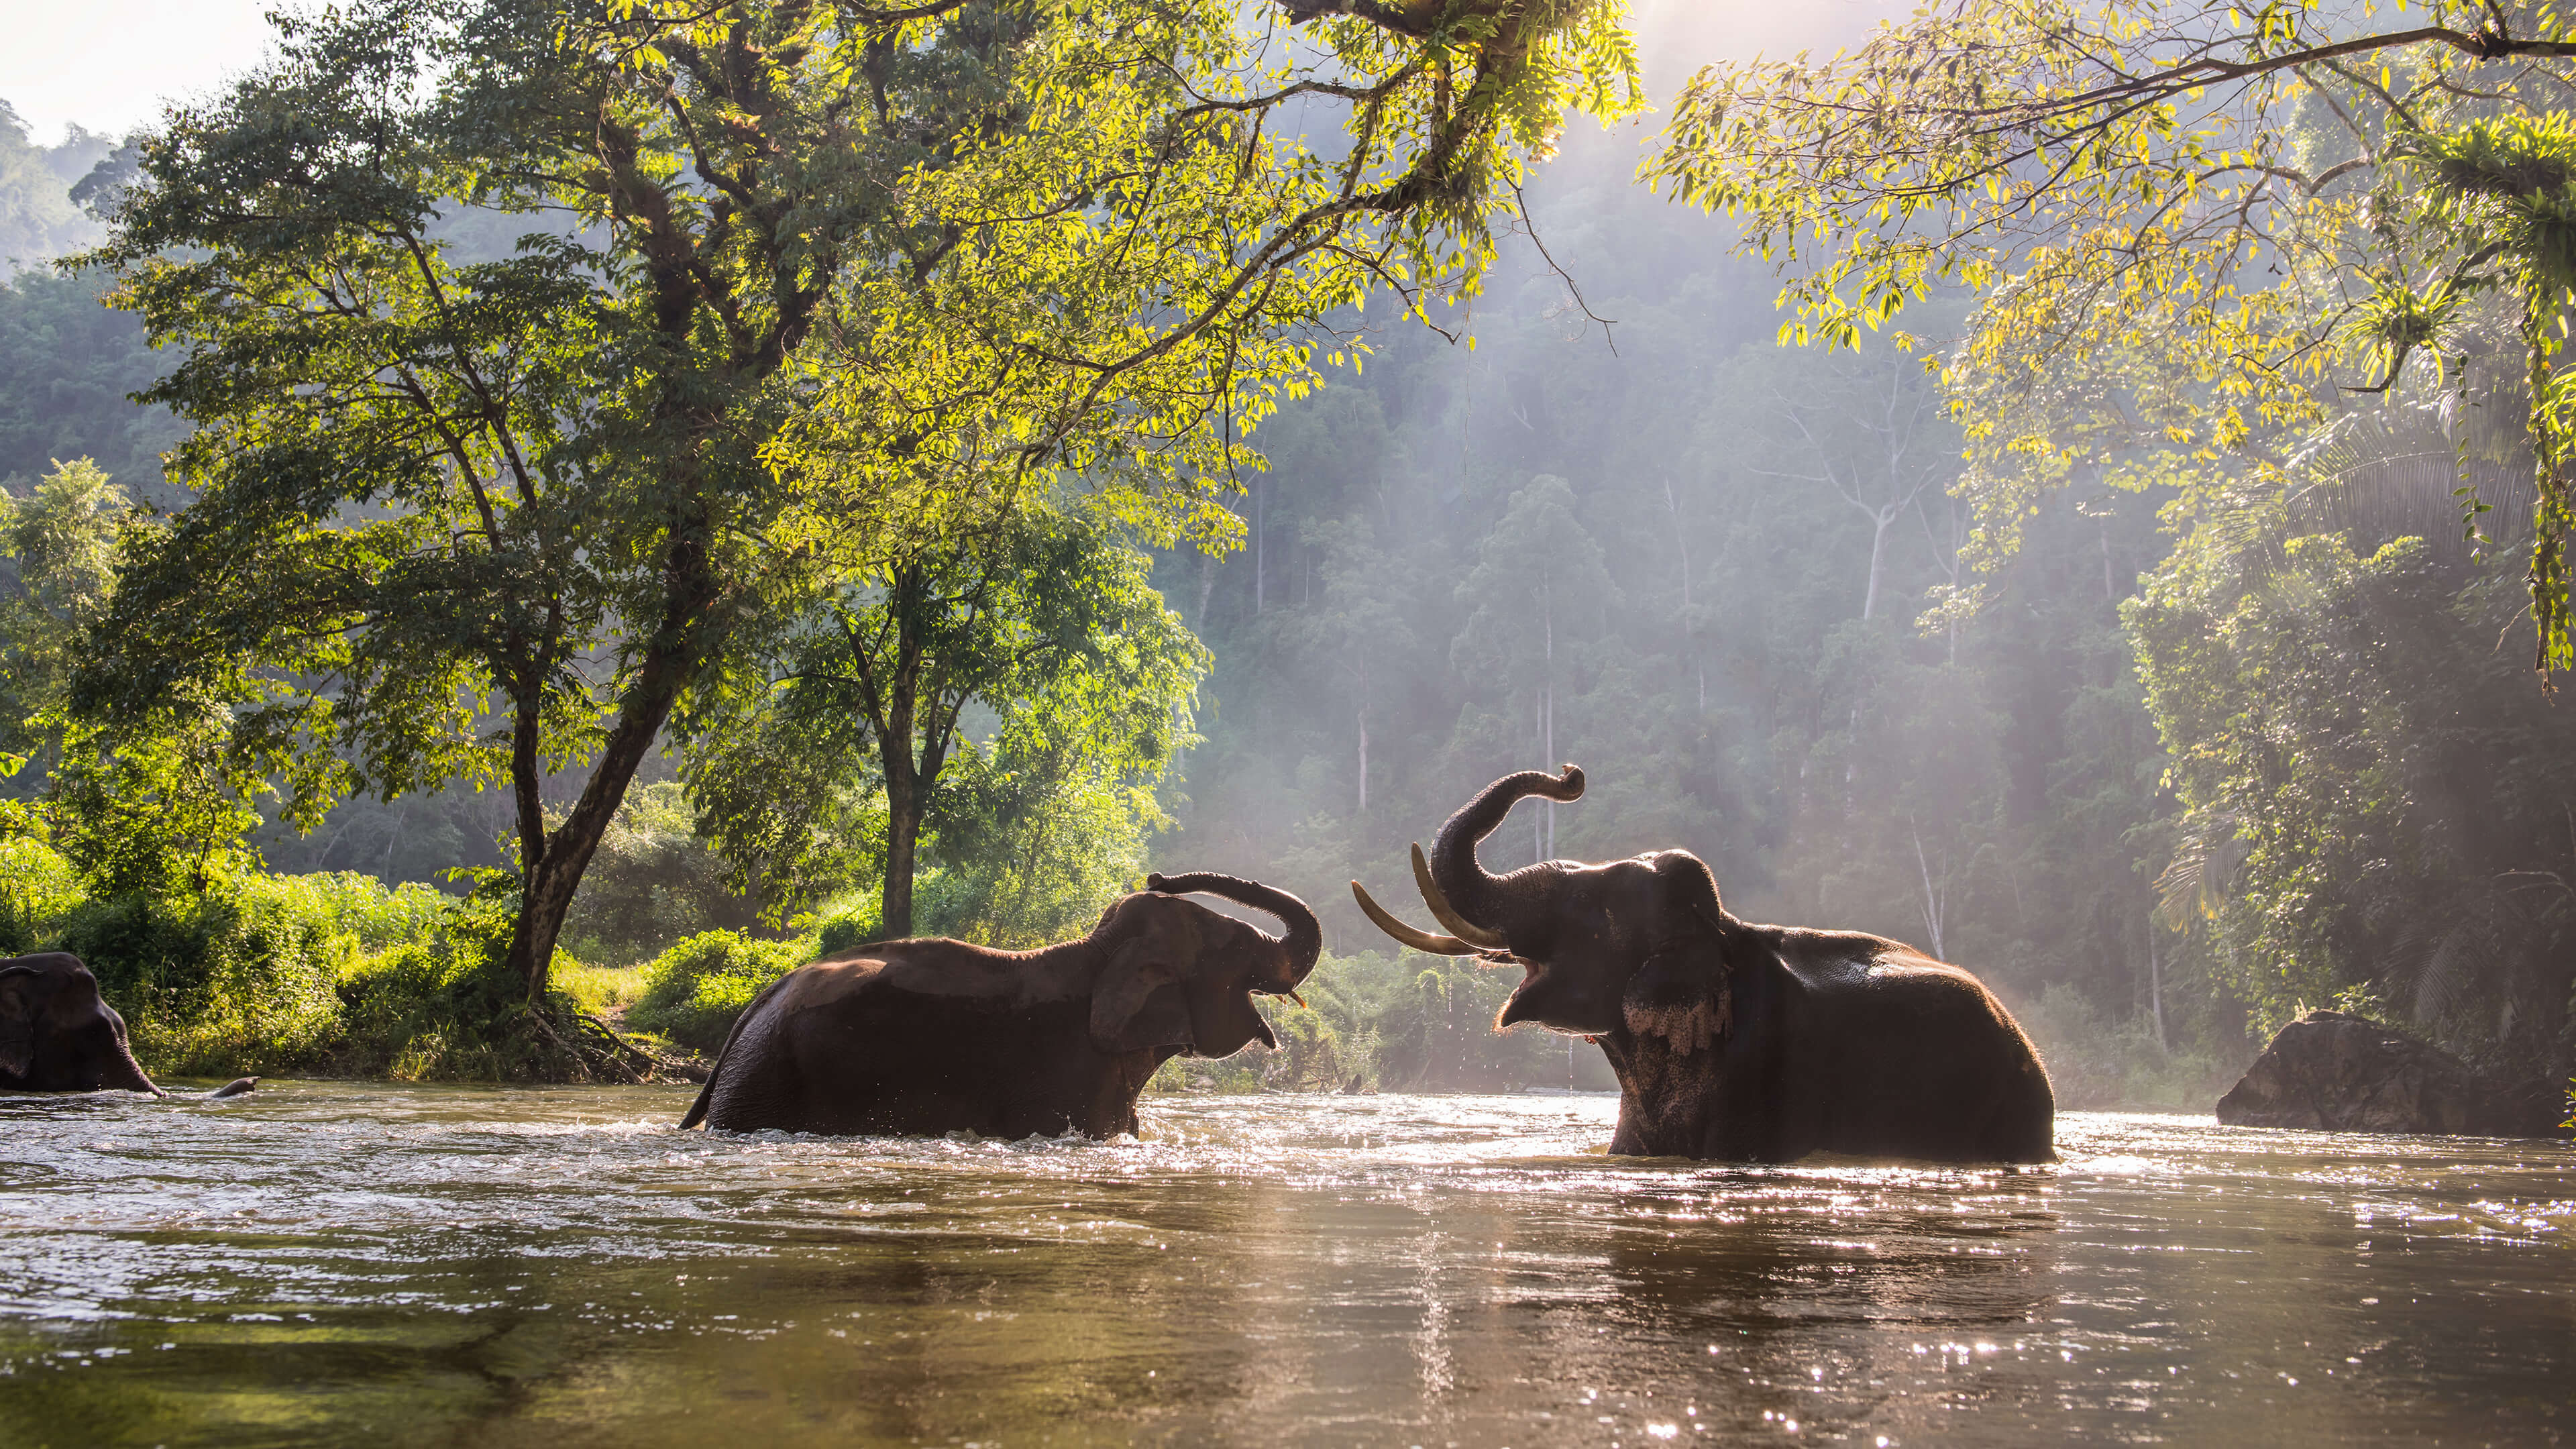 General 3840x2160 river riverside river delta landscape nature elephant water animals trees